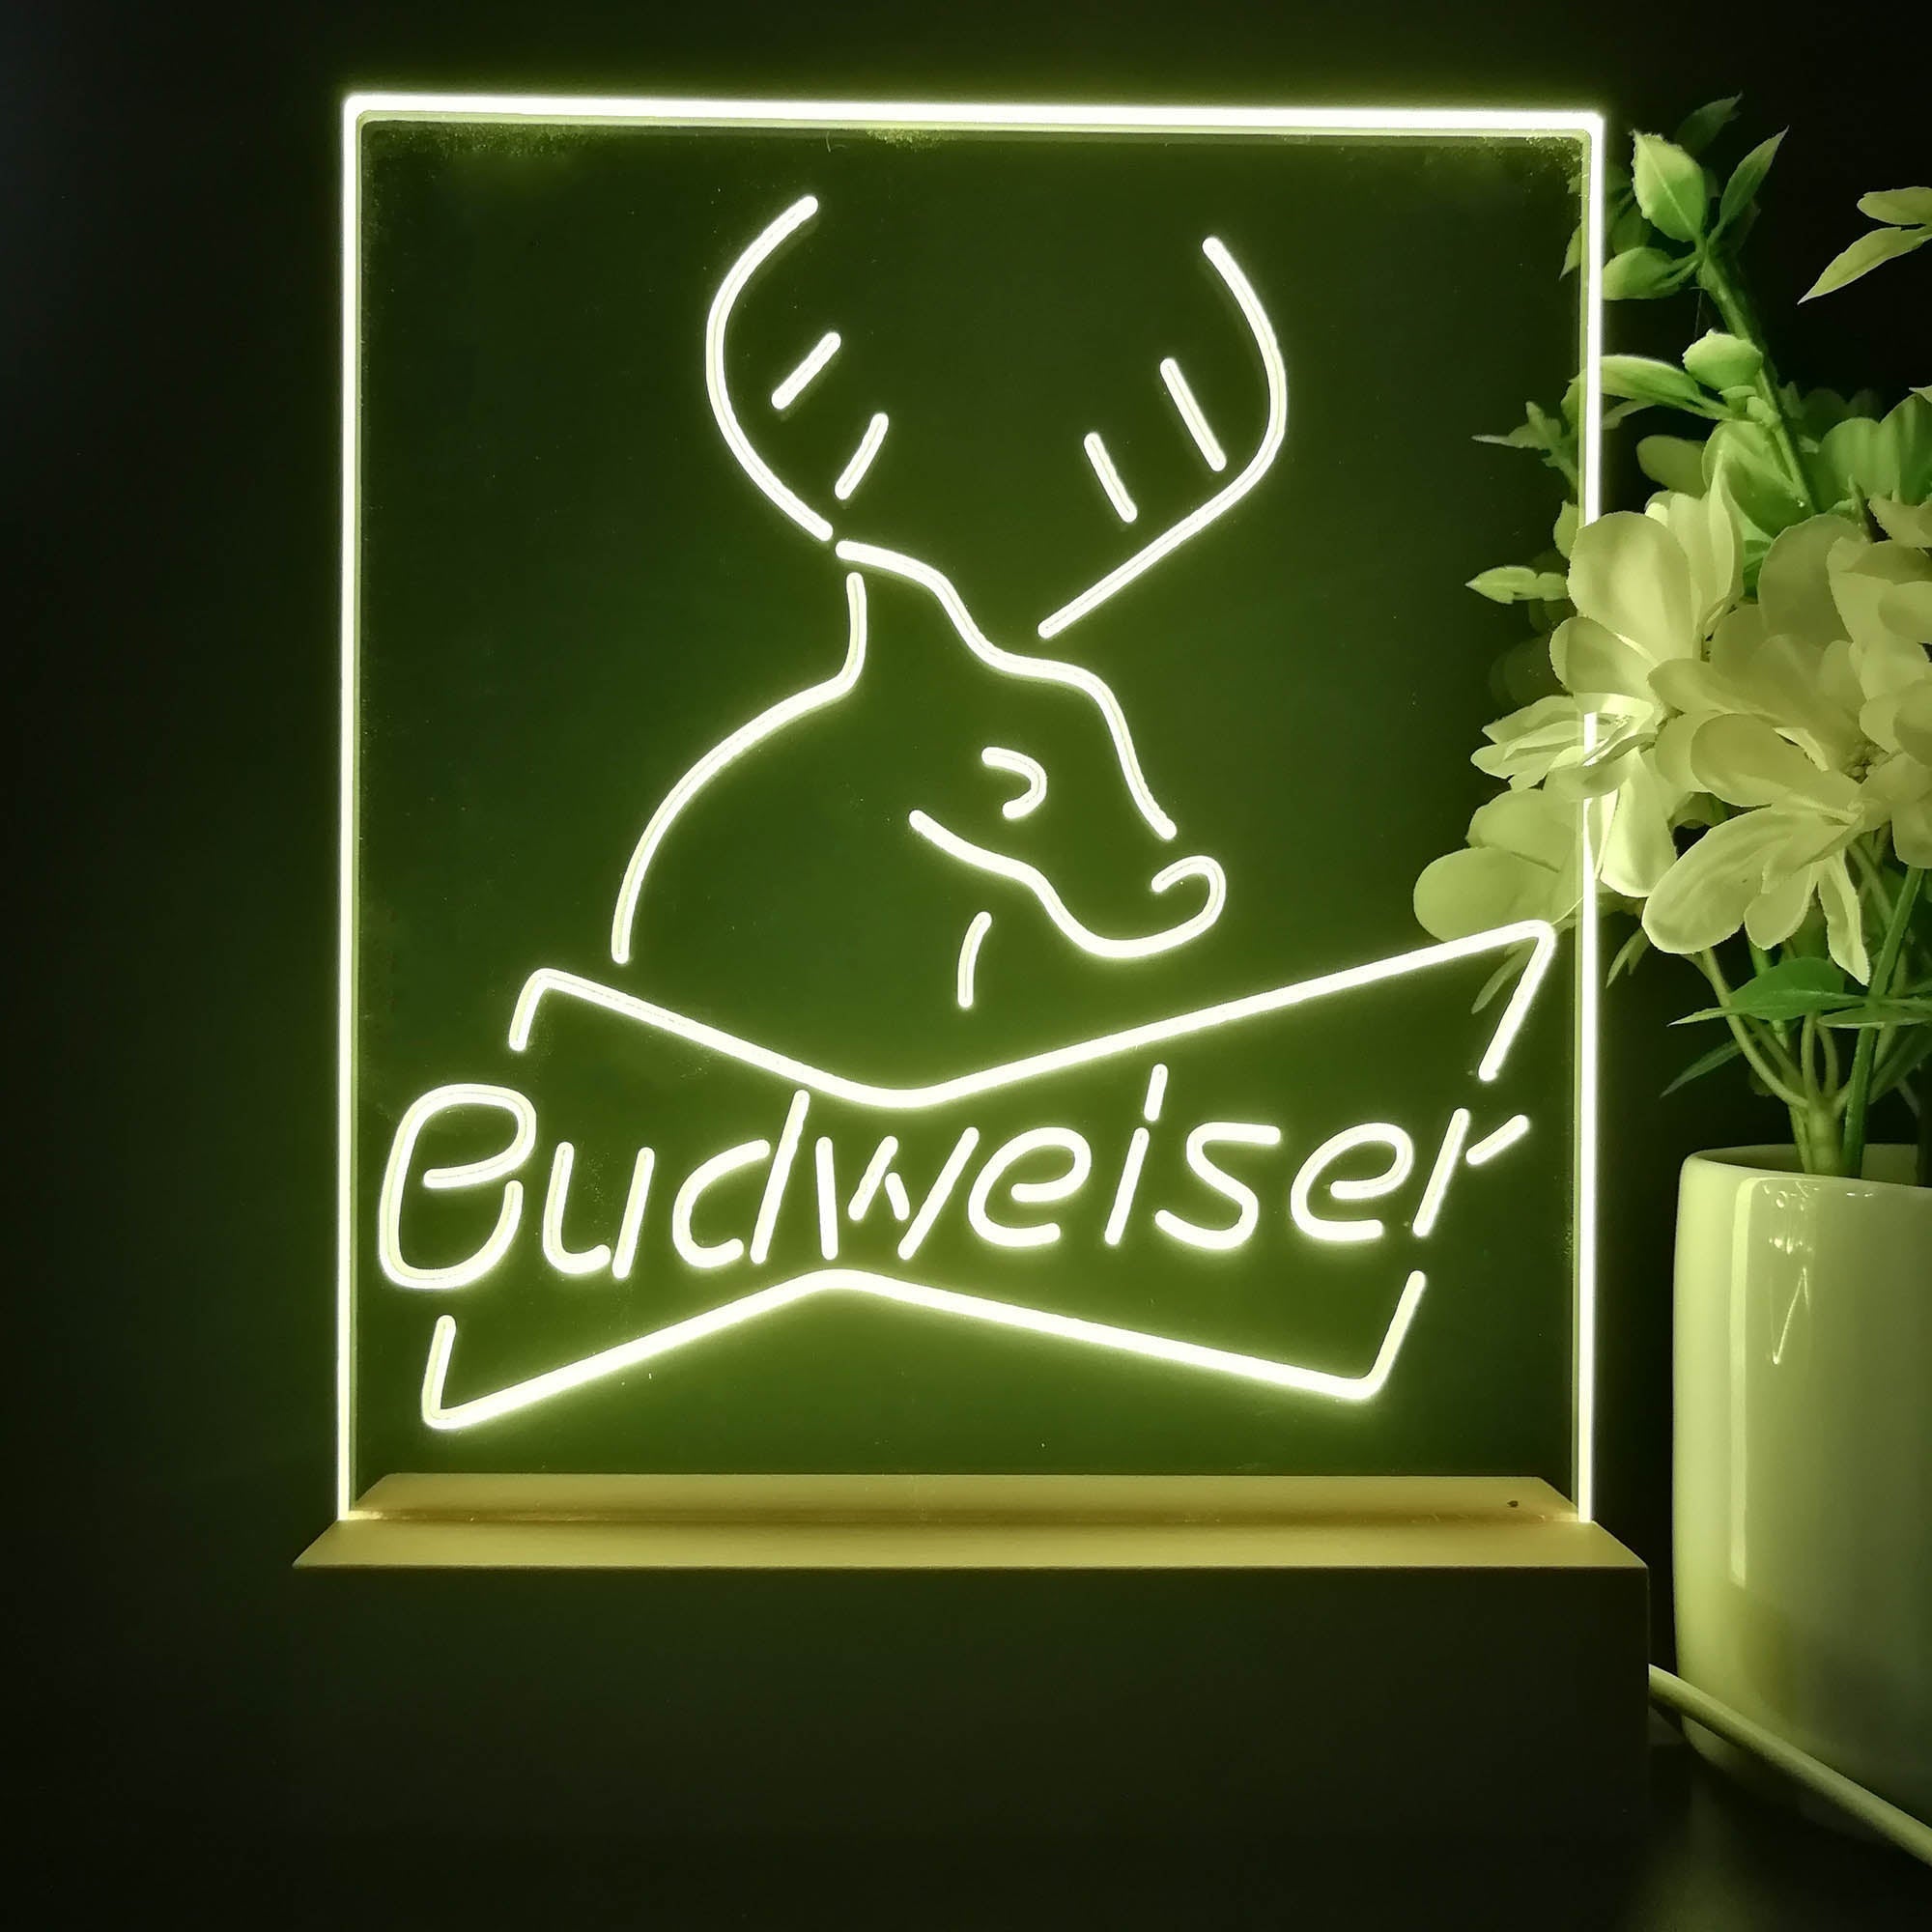 Budweiser Deer Hunting Cabin Night Light Neon Pub Bar Lamp